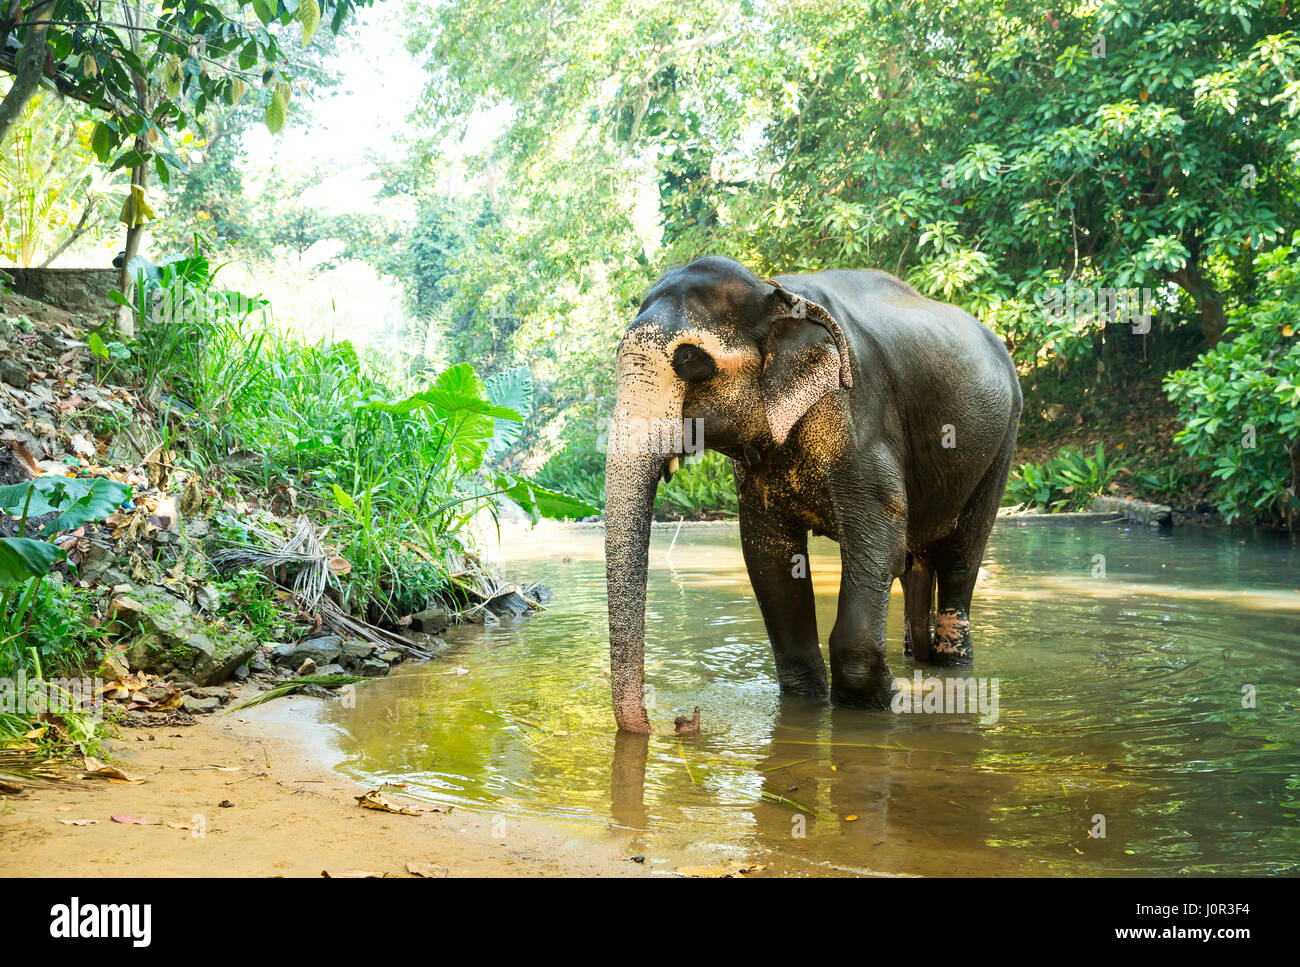 Ceylon wild elephant drink water from river in the jungle. Sri Lanka wildlife Stock Photo